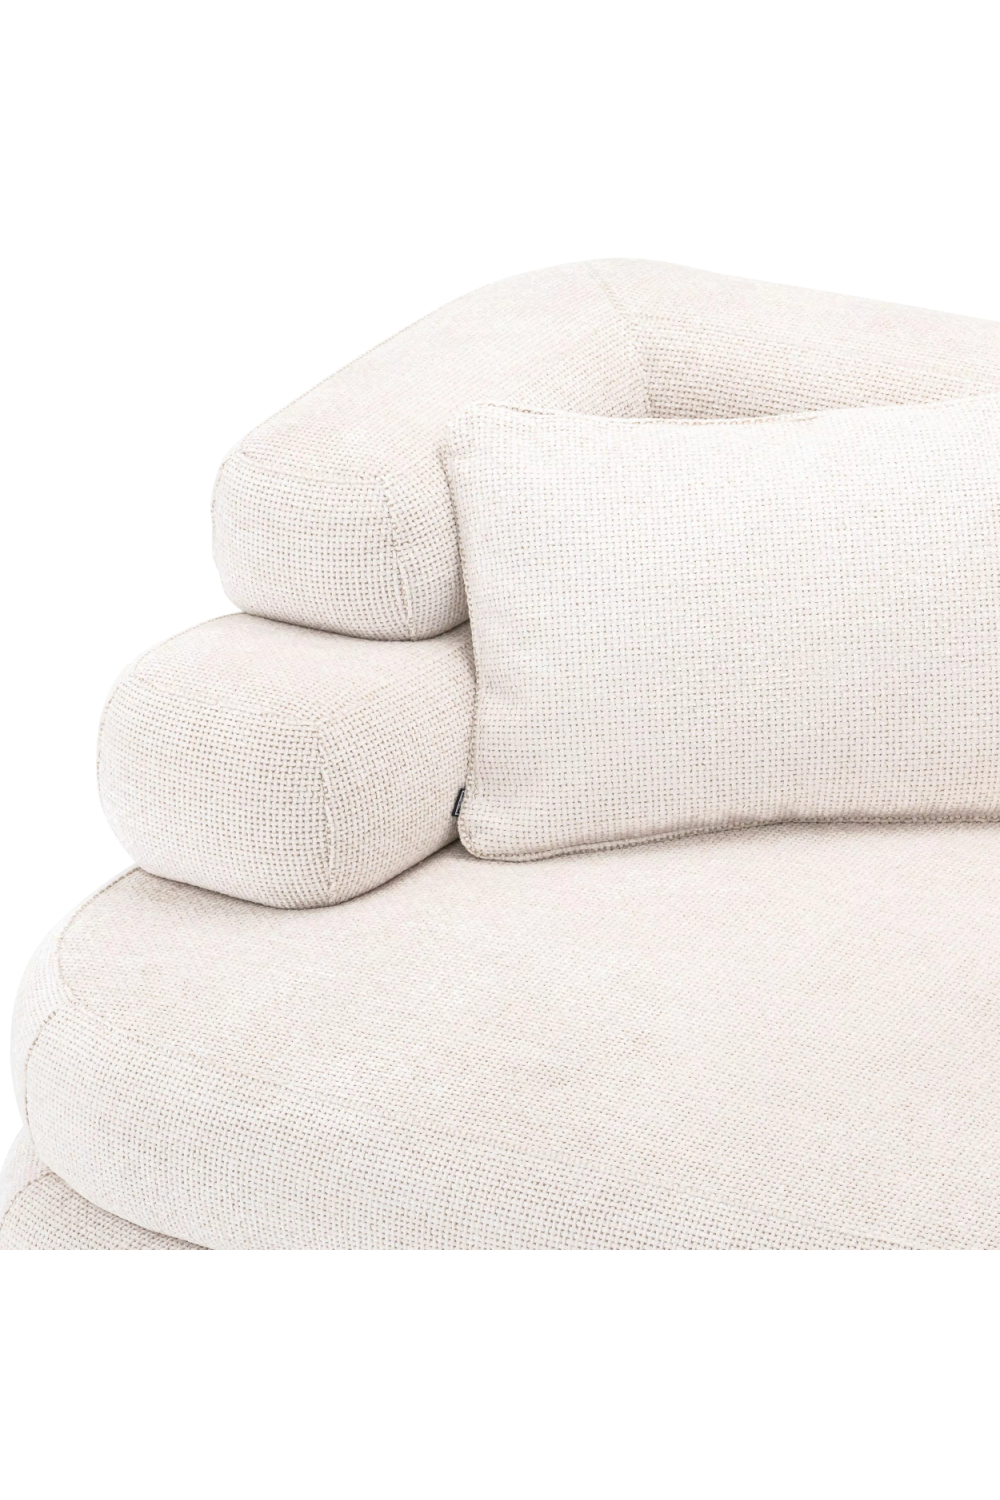 White Layered Lounge Chair | Eichholtz Malaga | Oroa.com